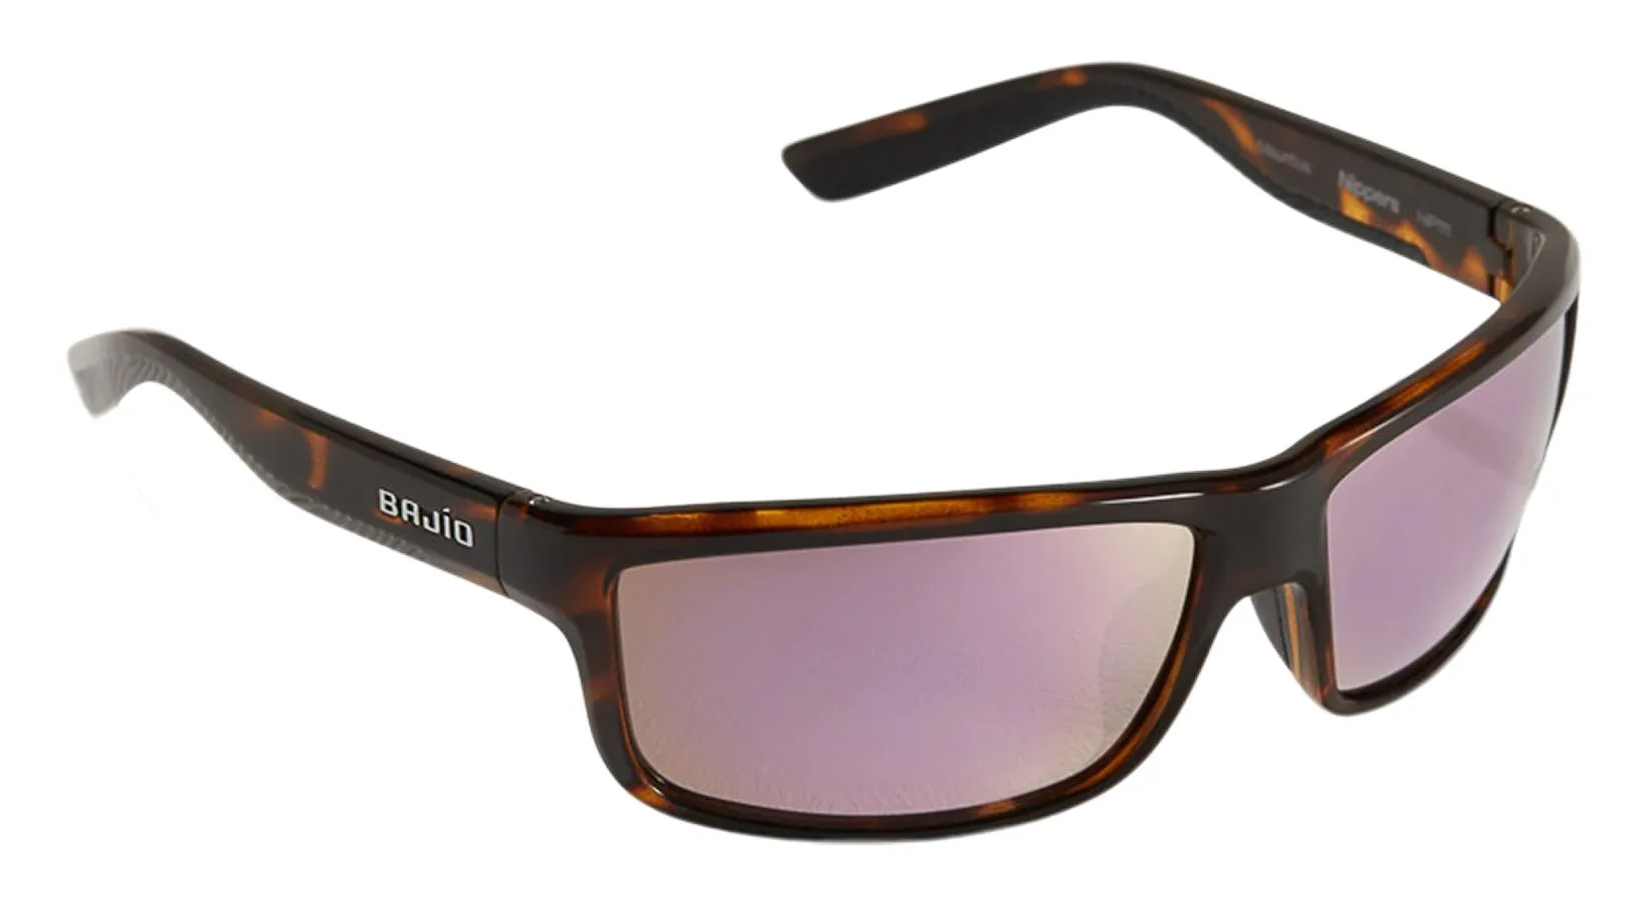 Bajío Nippers sunglasses in dark tortoise with rose mirror lenses.